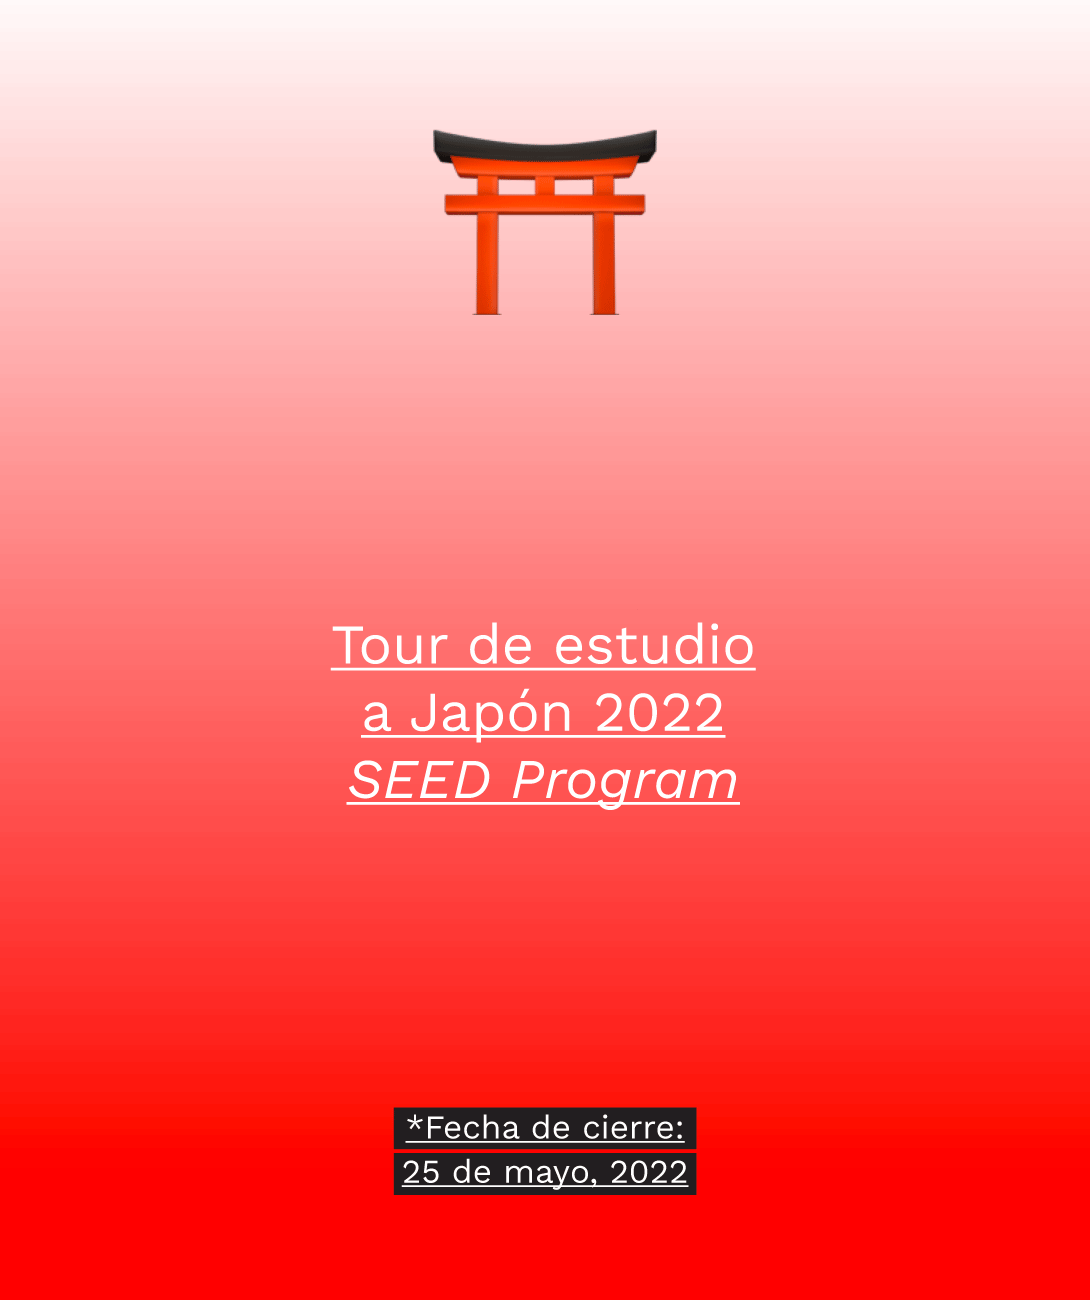 Tour de estudio a Japón 2022